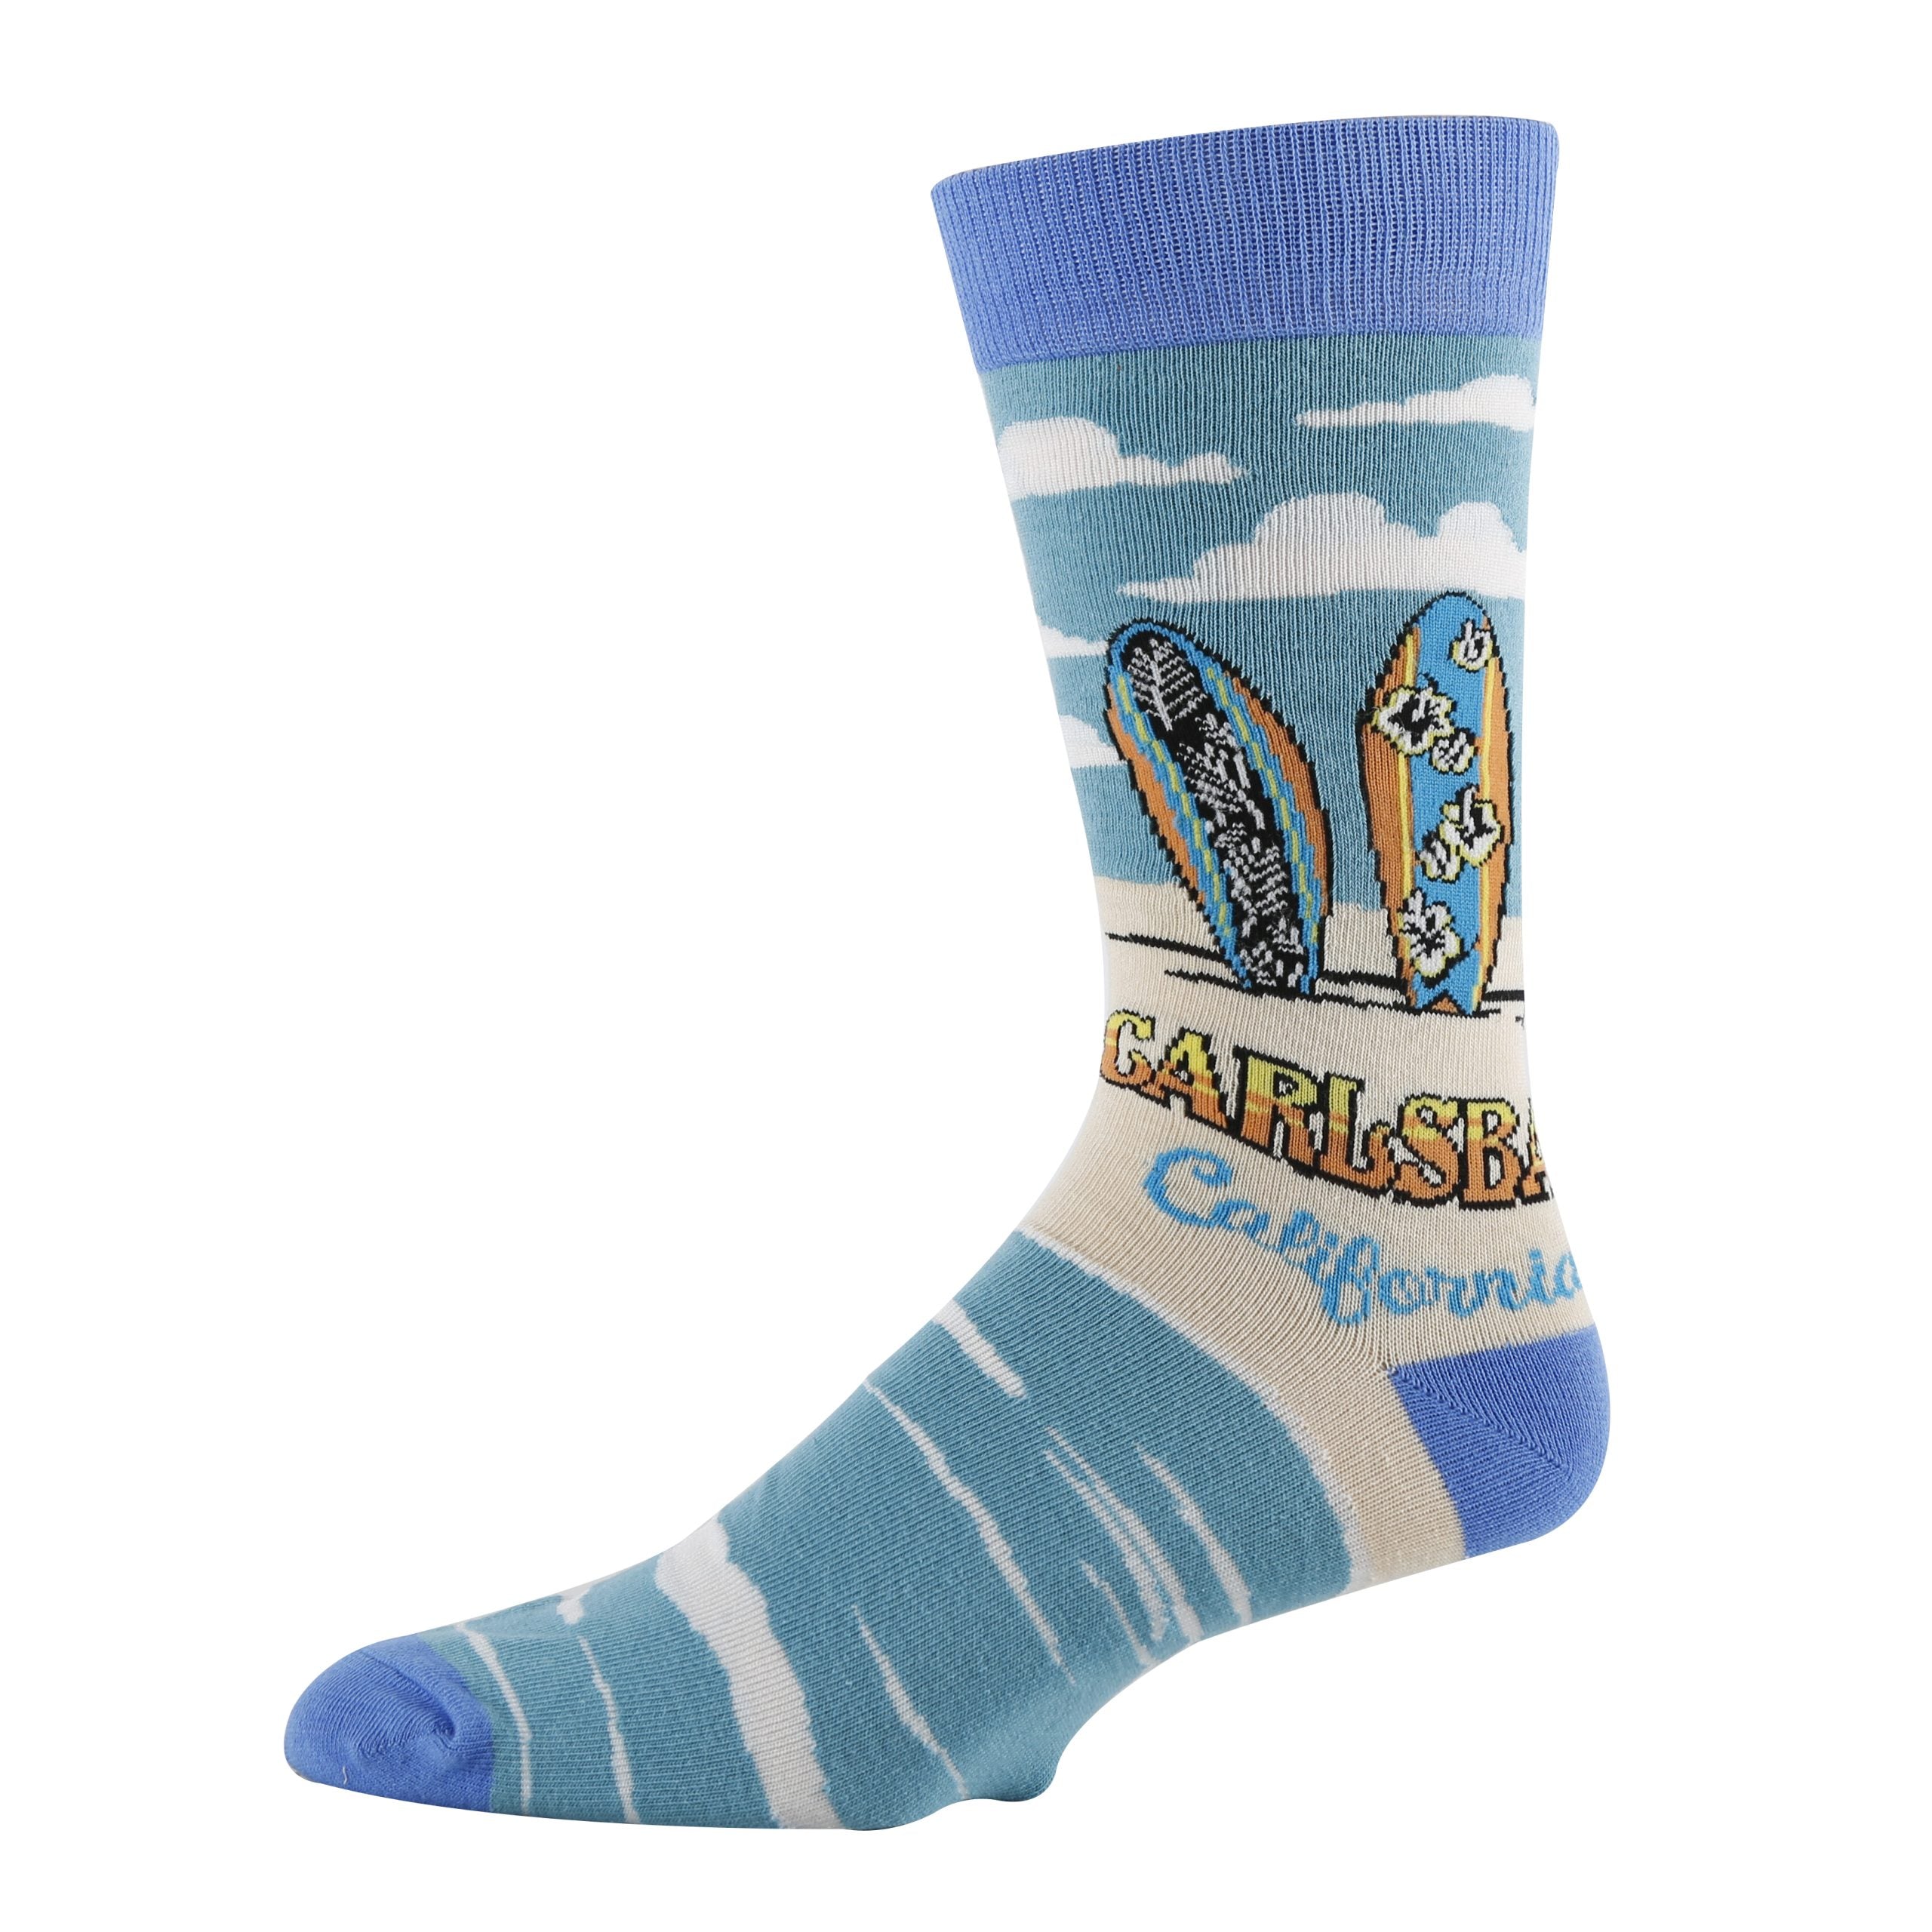 Calrsbad Socks